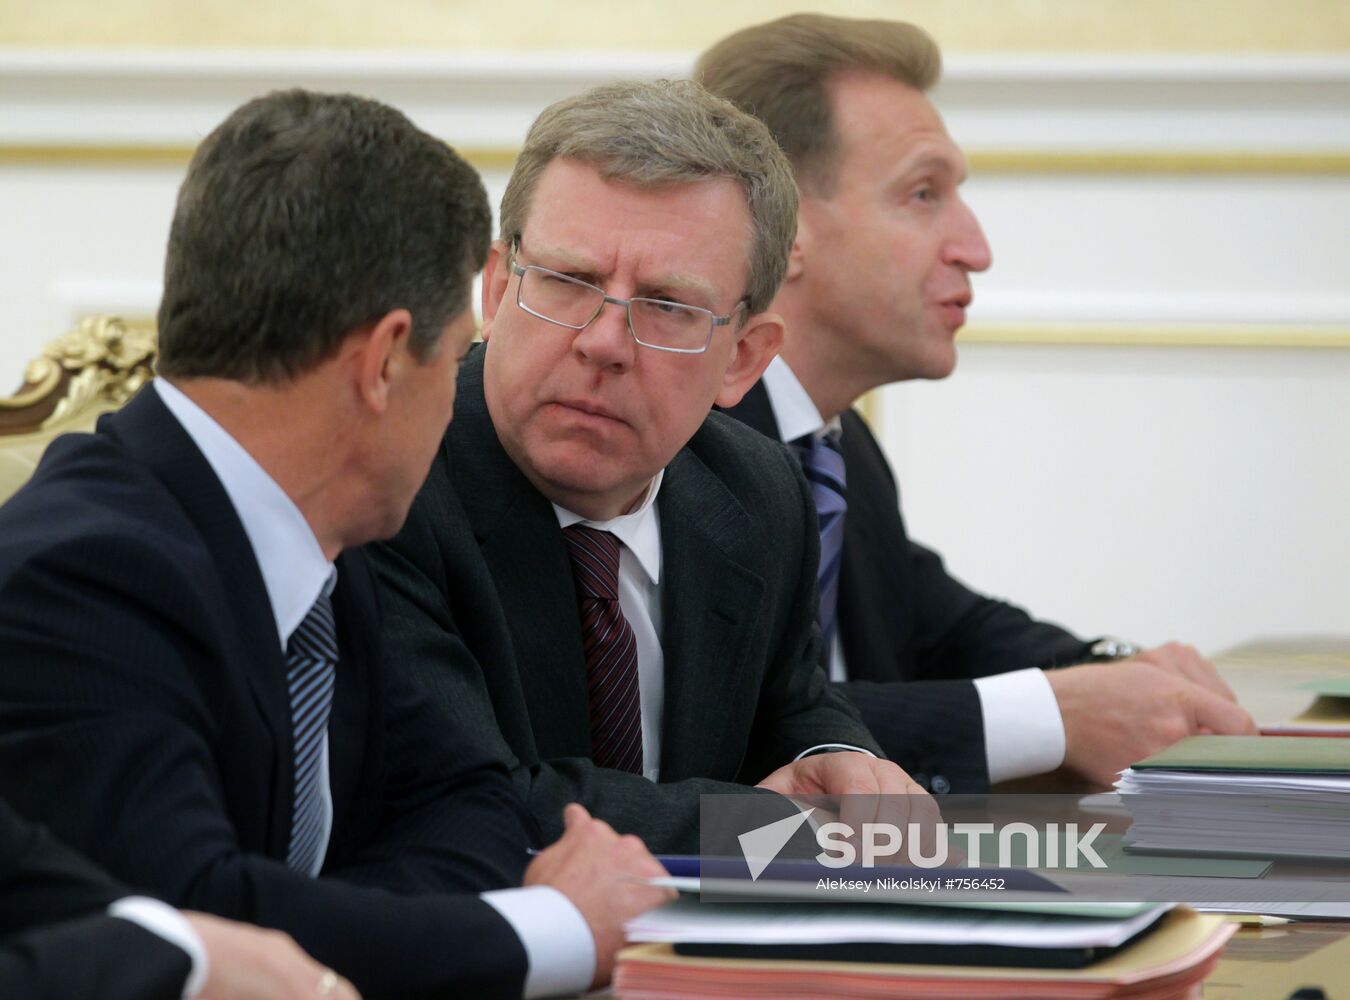 Meeting of Government Presidium of Russian Federation